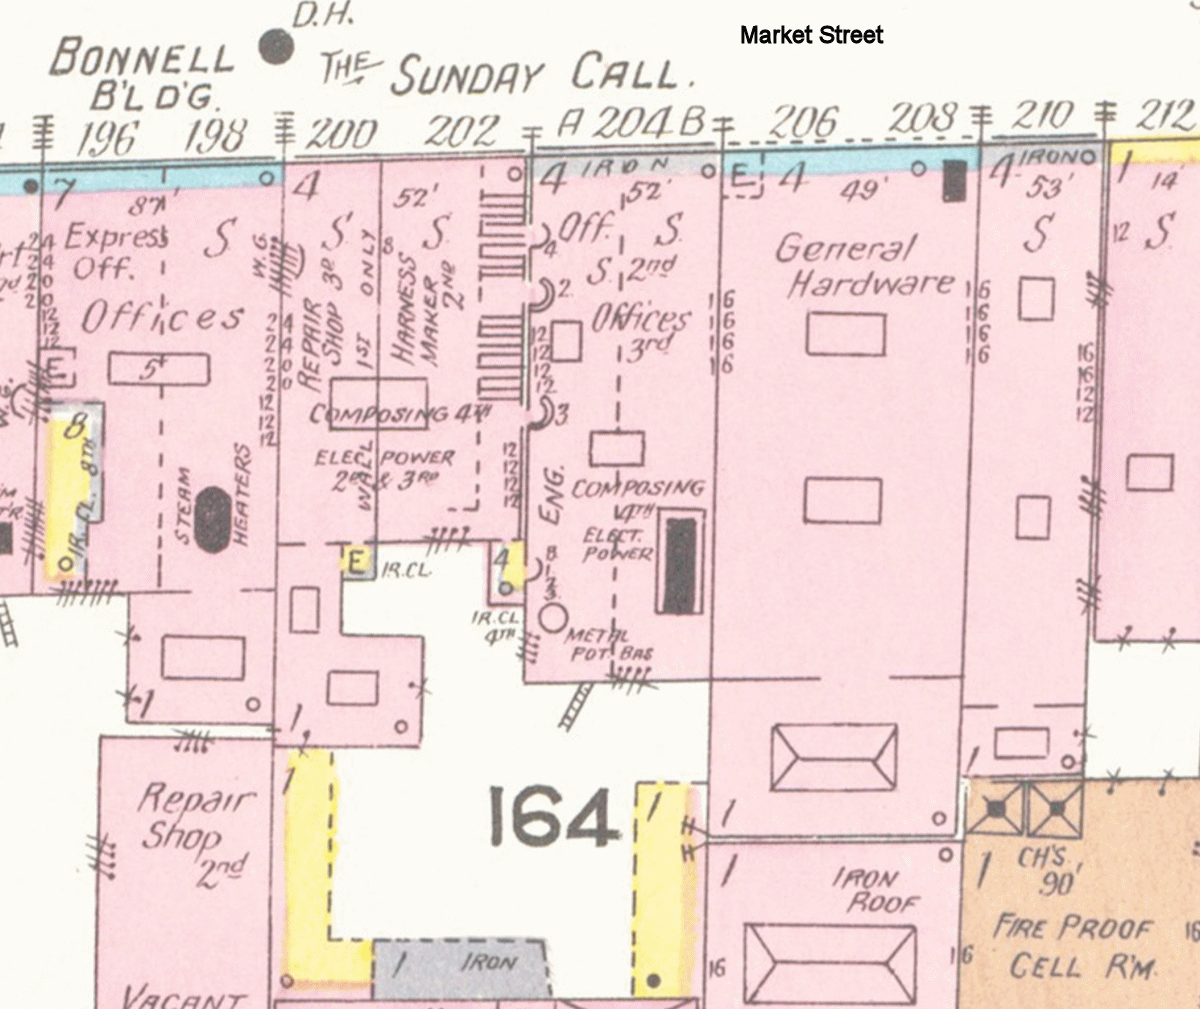 1908 Map
200-204 Market Street
